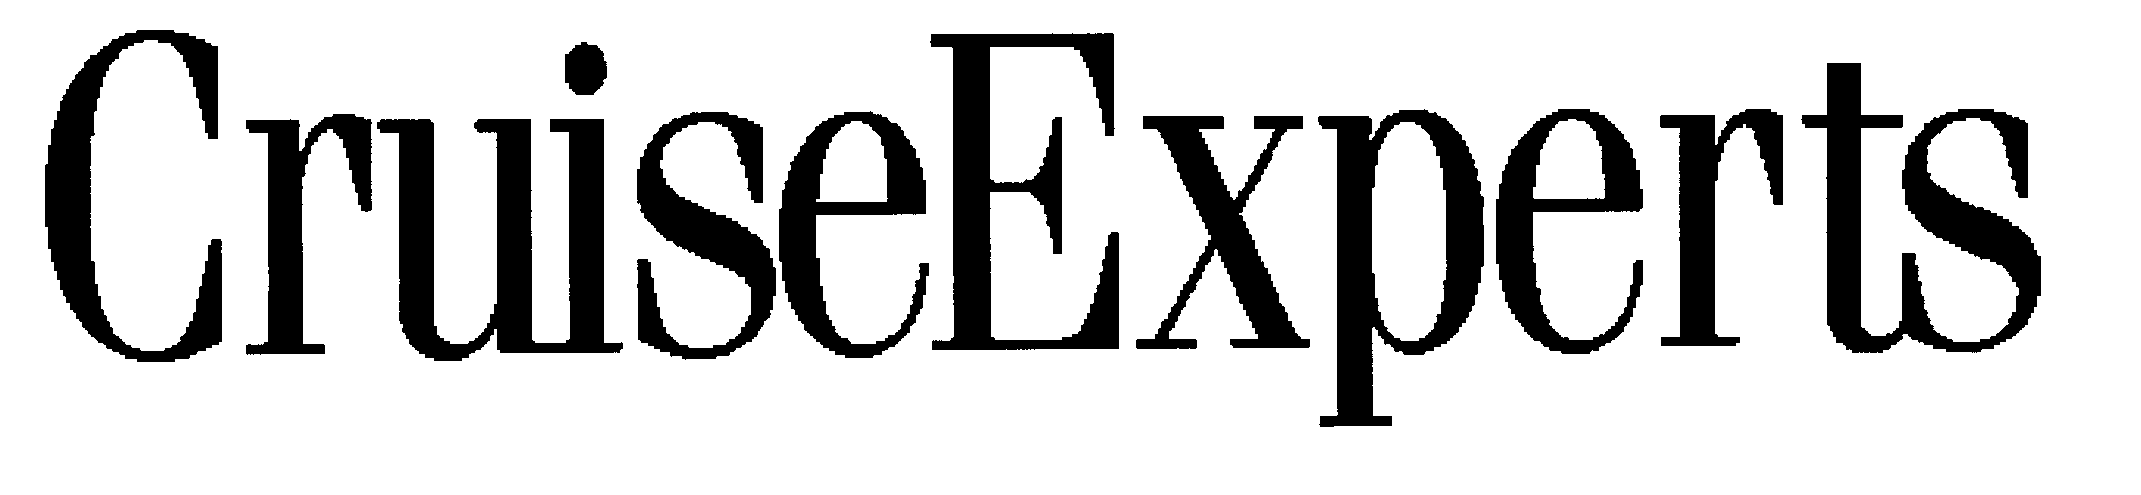 Trademark Logo CRUISEEXPERTS